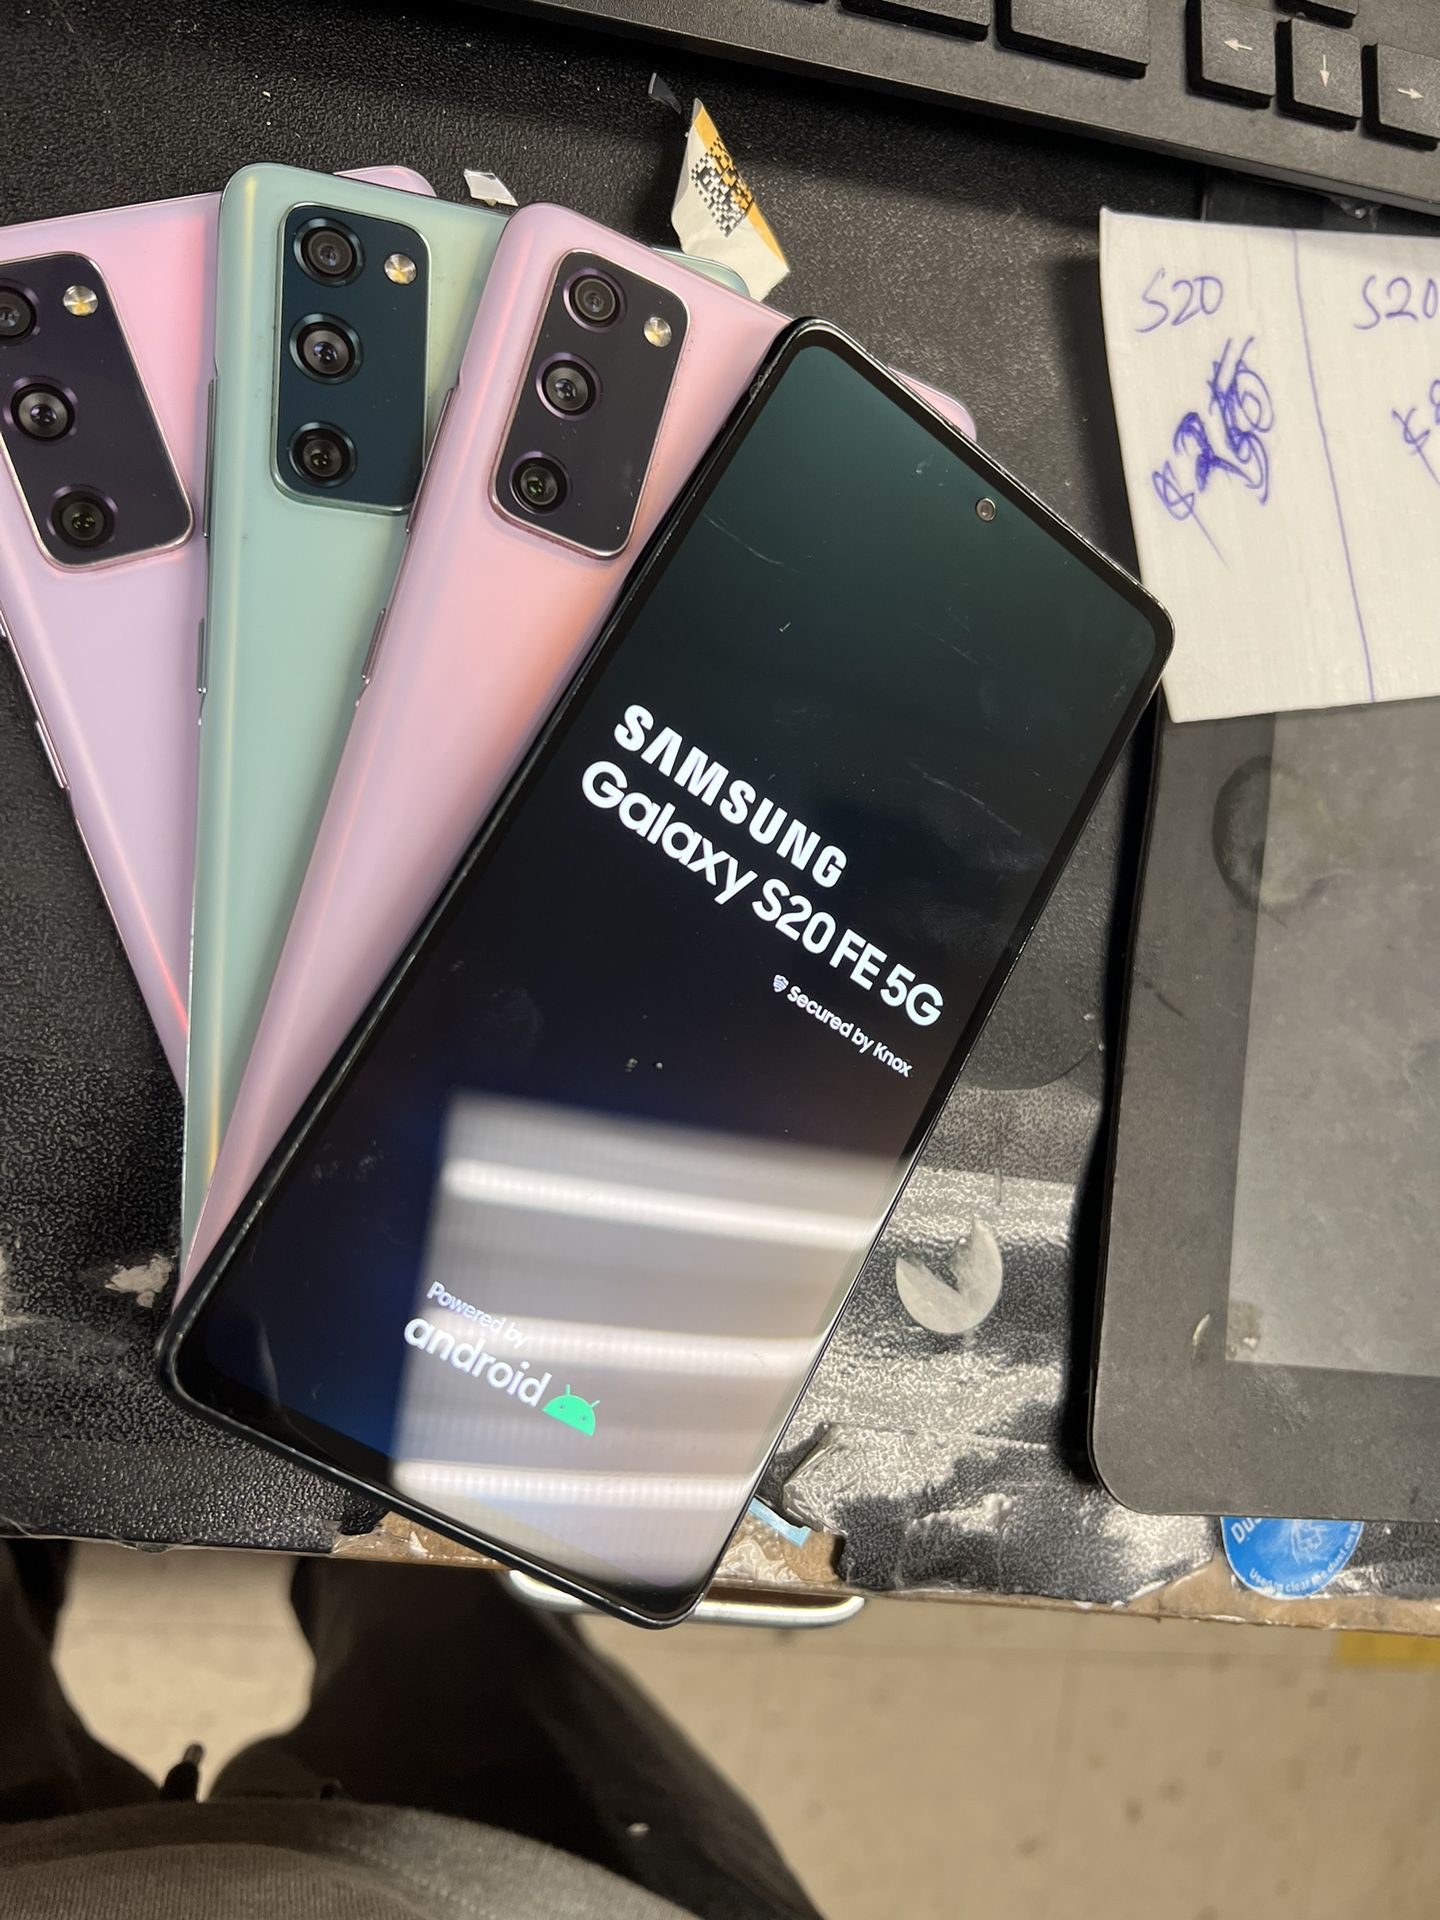 Samsung Galaxy s20 Fe 5g unlocked 128gb , Sold with warranty 